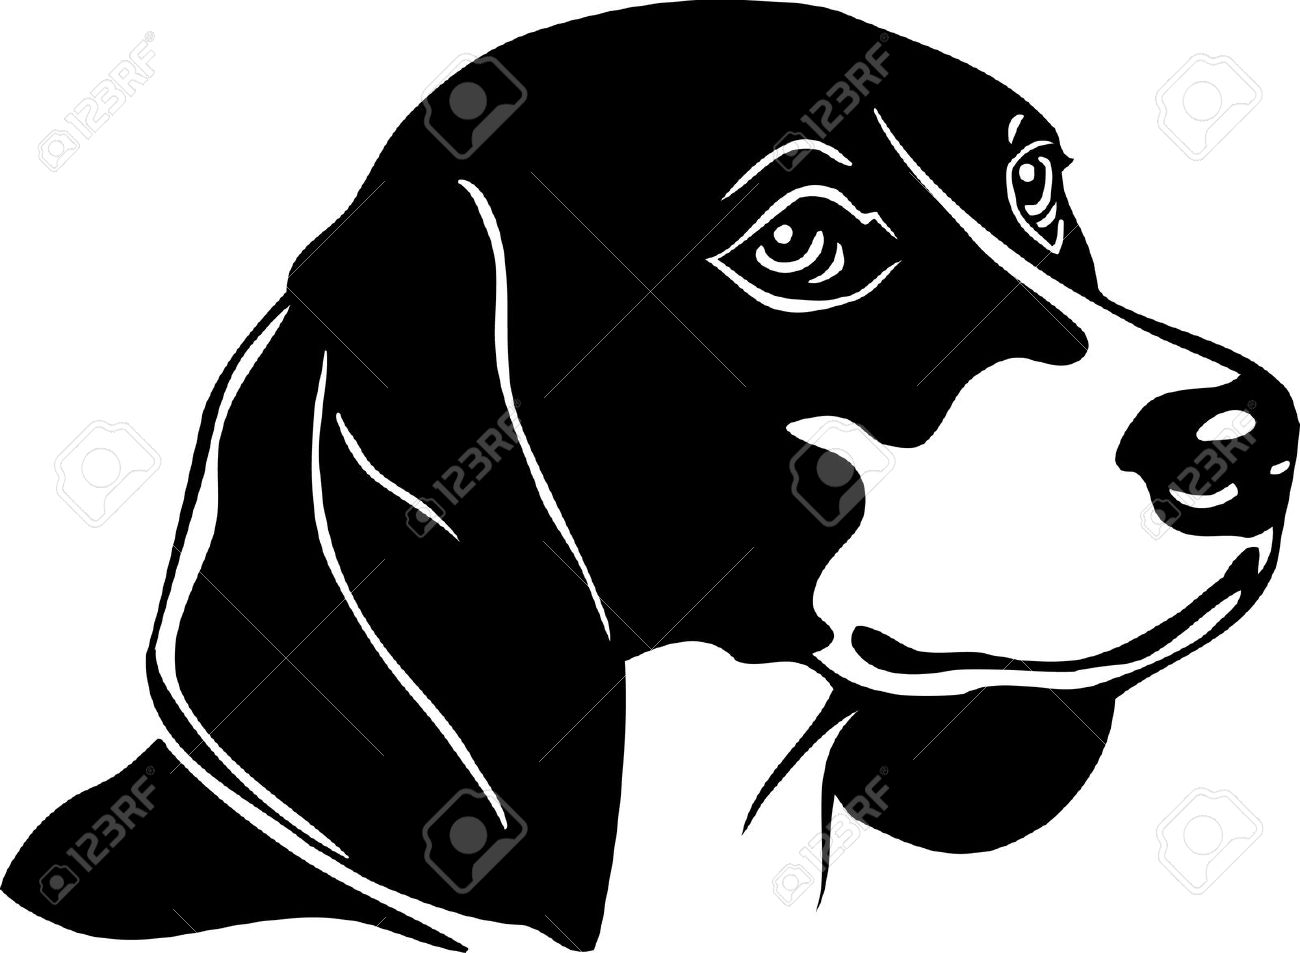 Beagle silhouette clip art